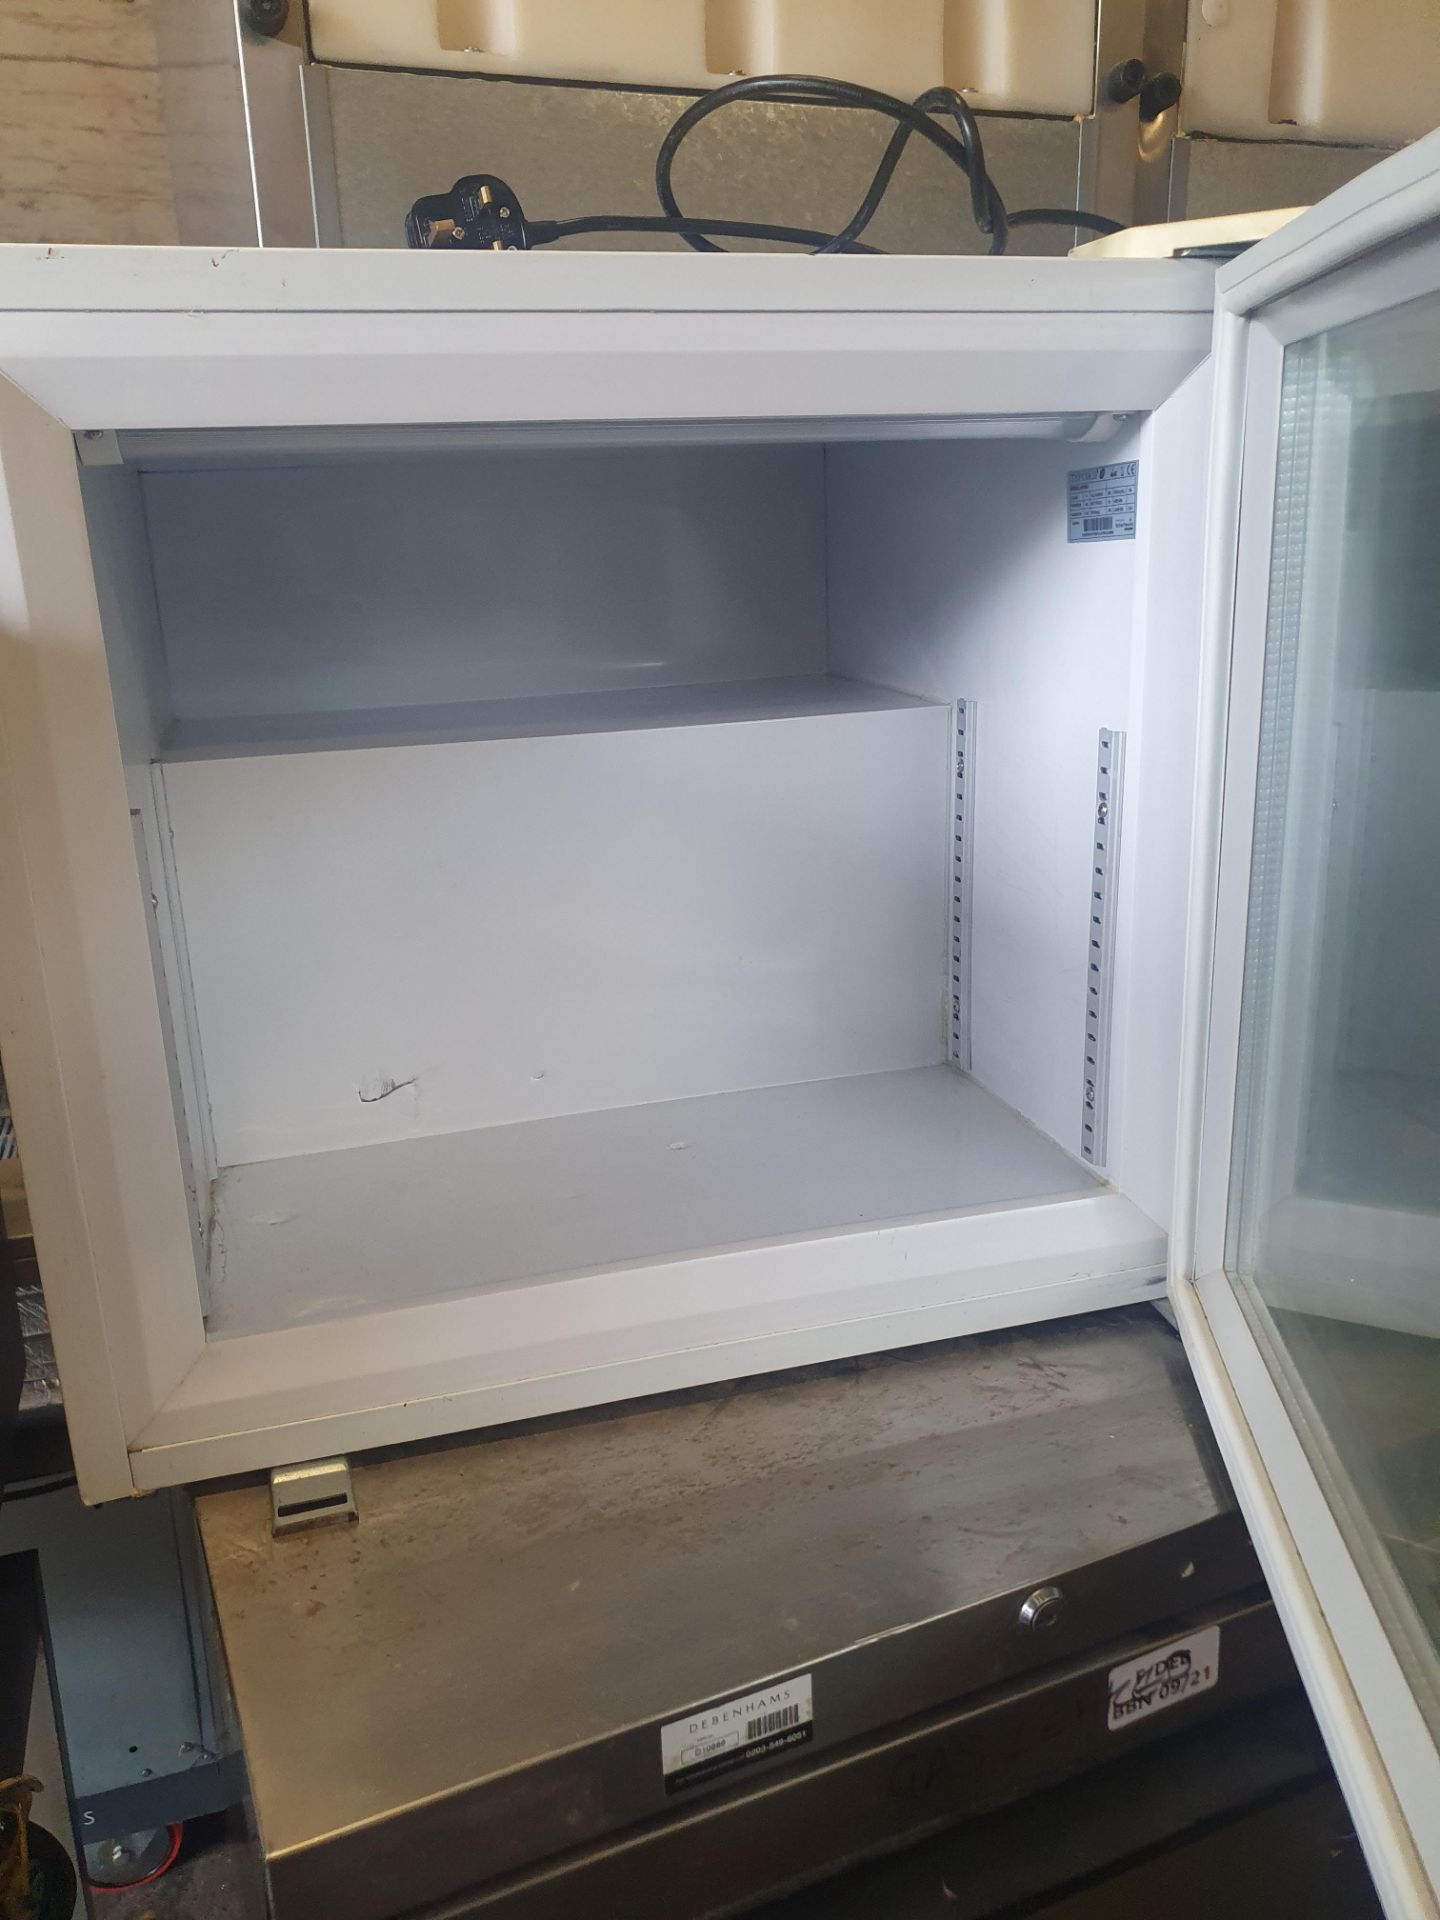 * Tefcold countertop icecream freezer - not making temp - Image 2 of 3